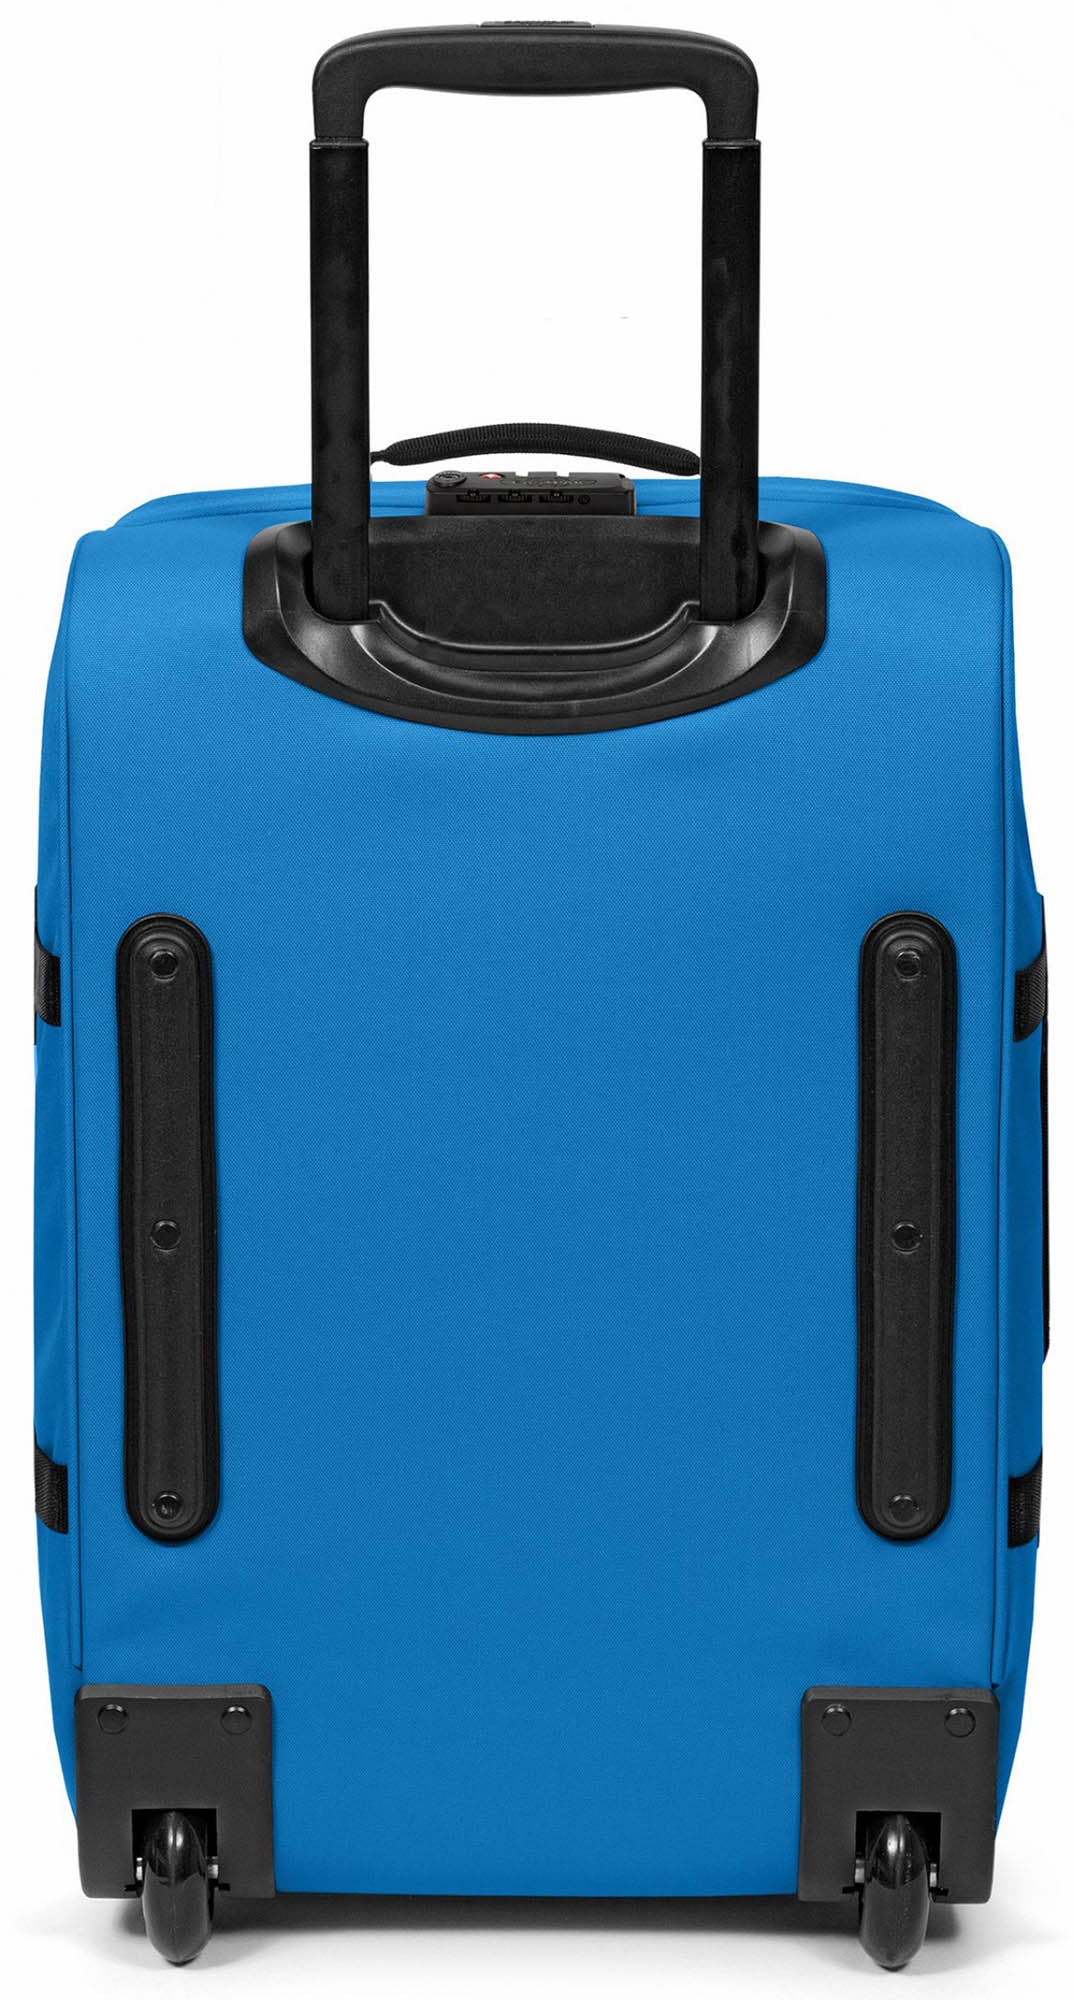 Eastpak Tranverz S Cabin Suitcase - Vibrant Blue